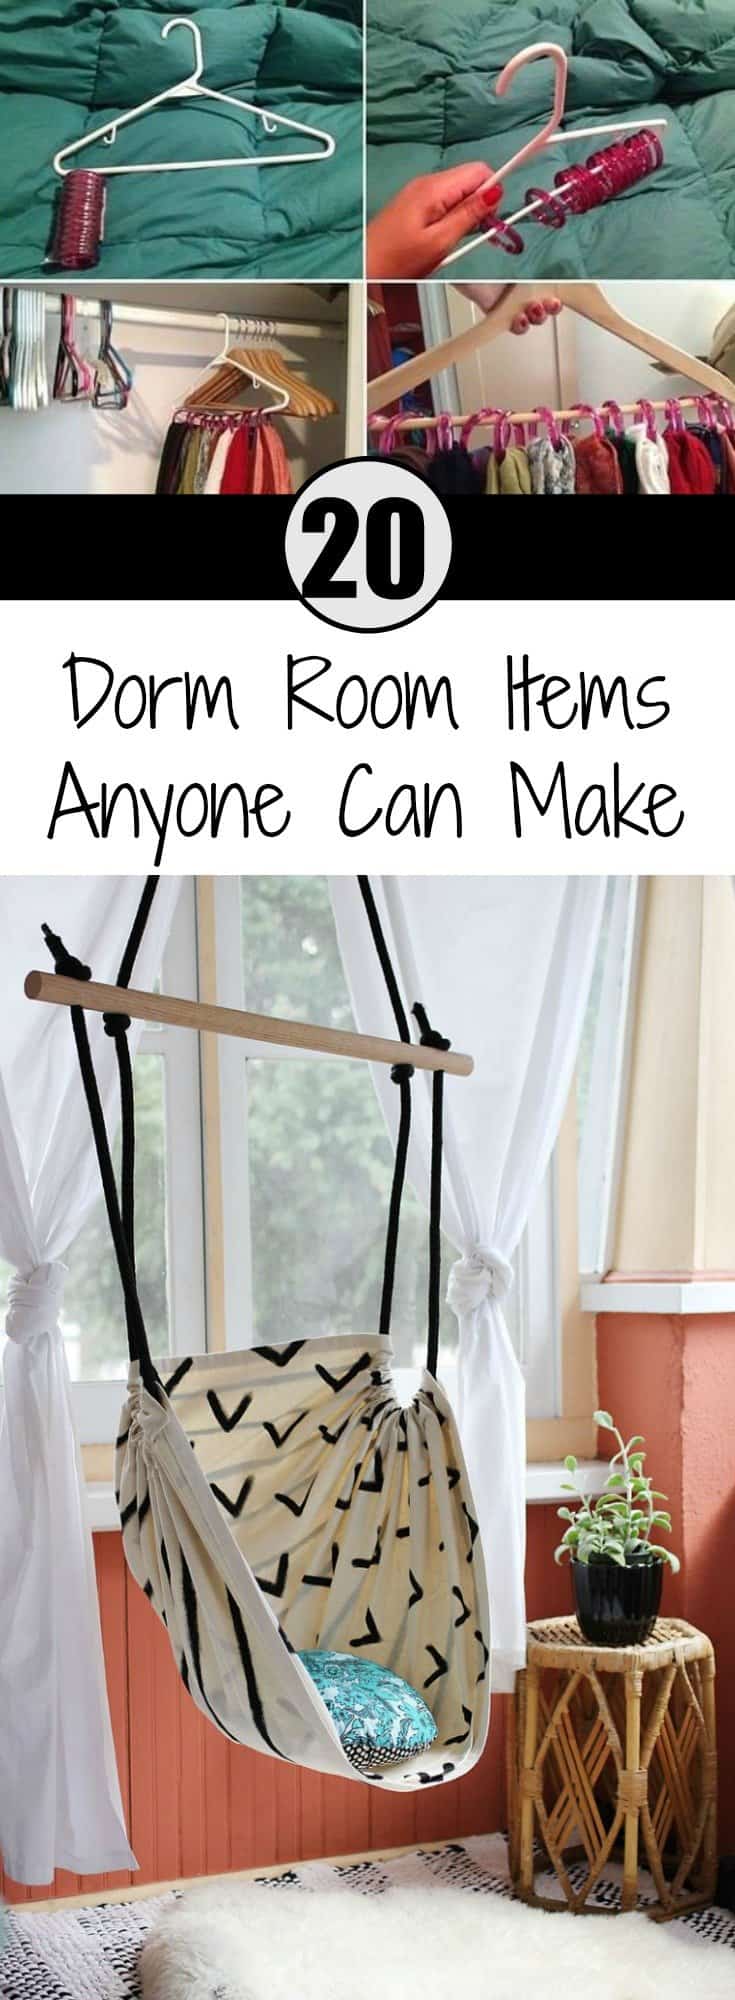 20 Dorm Room Items Anyone Can Make